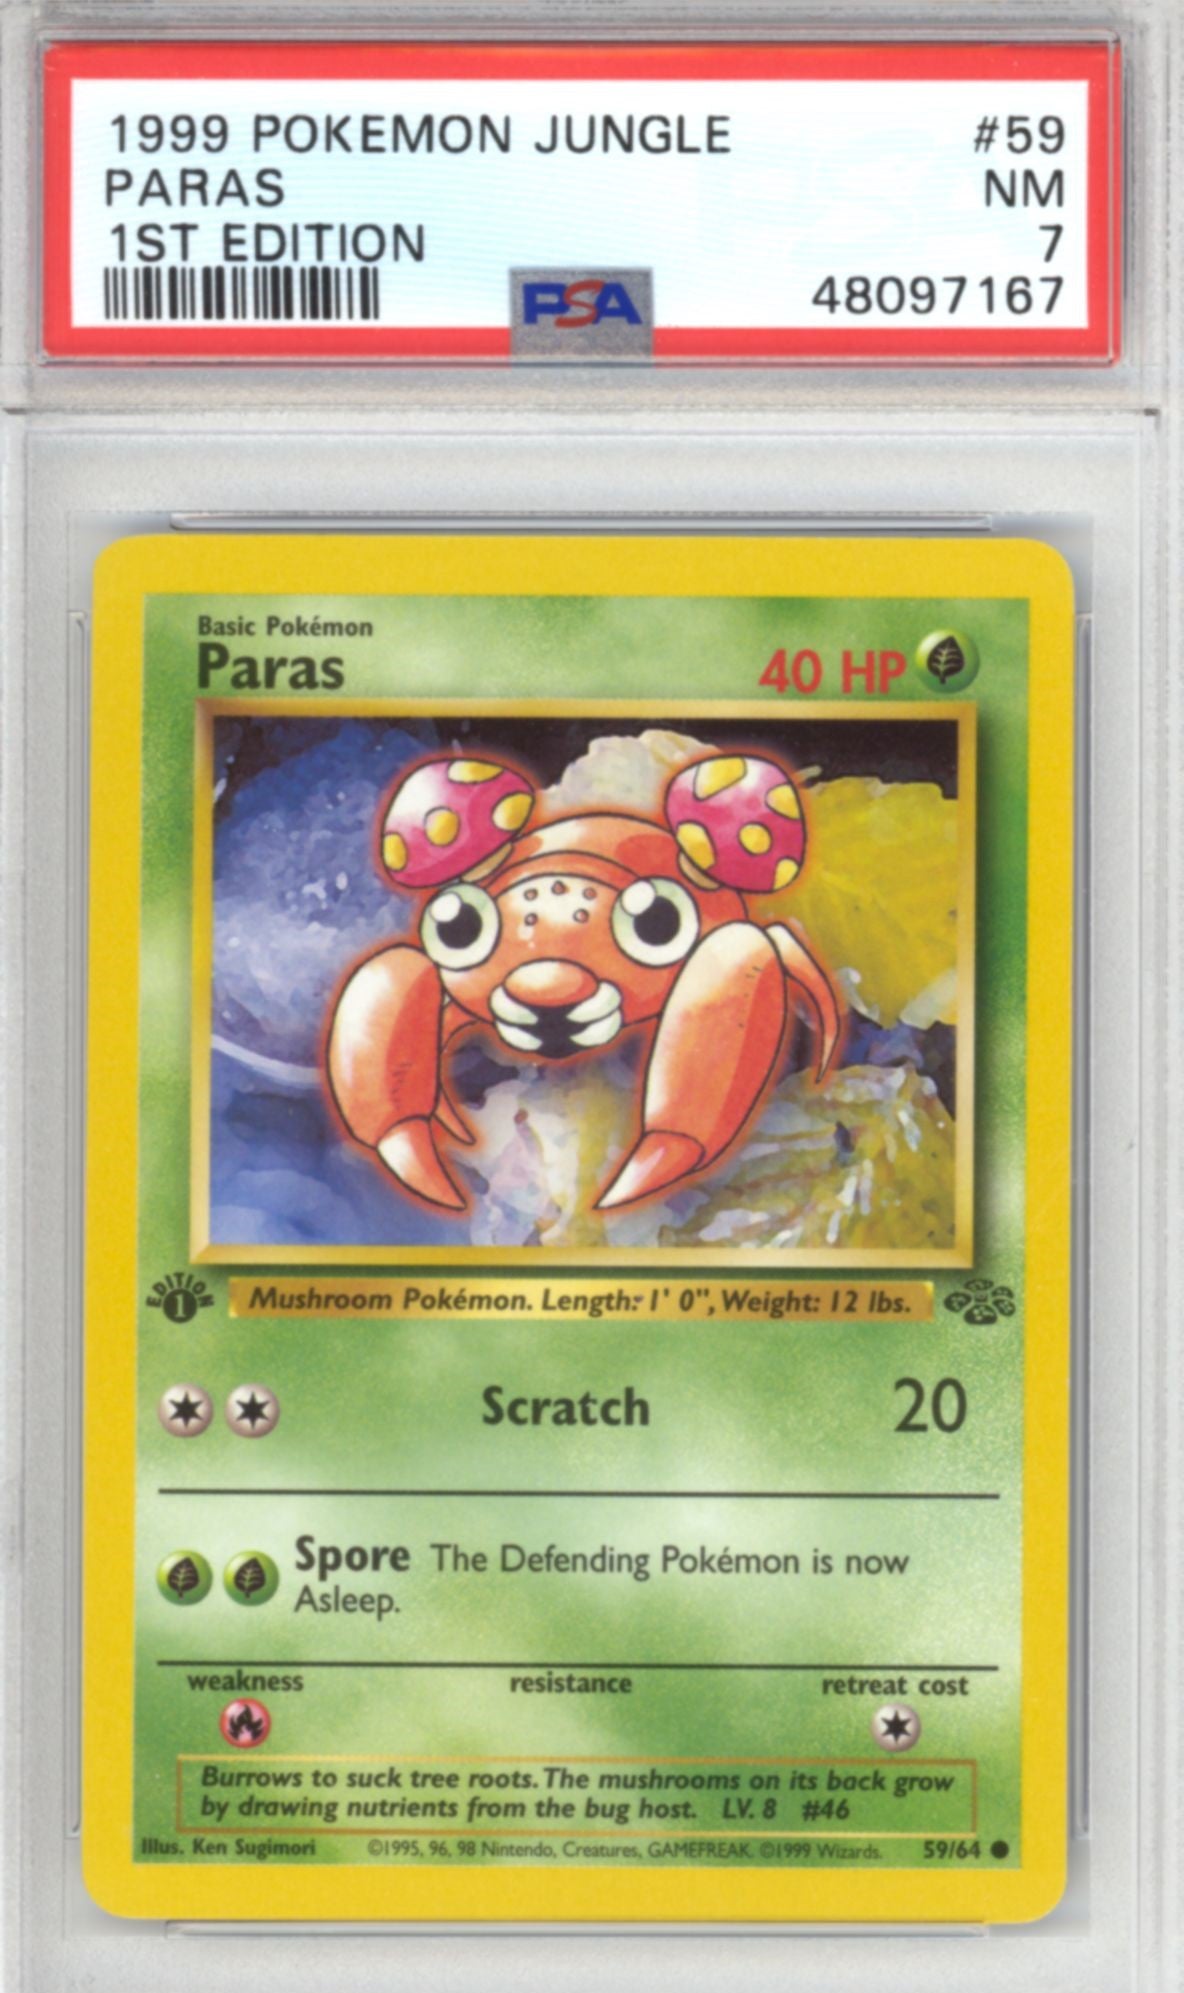 Paras [1st Edition] #59 - Pokemon Jungle